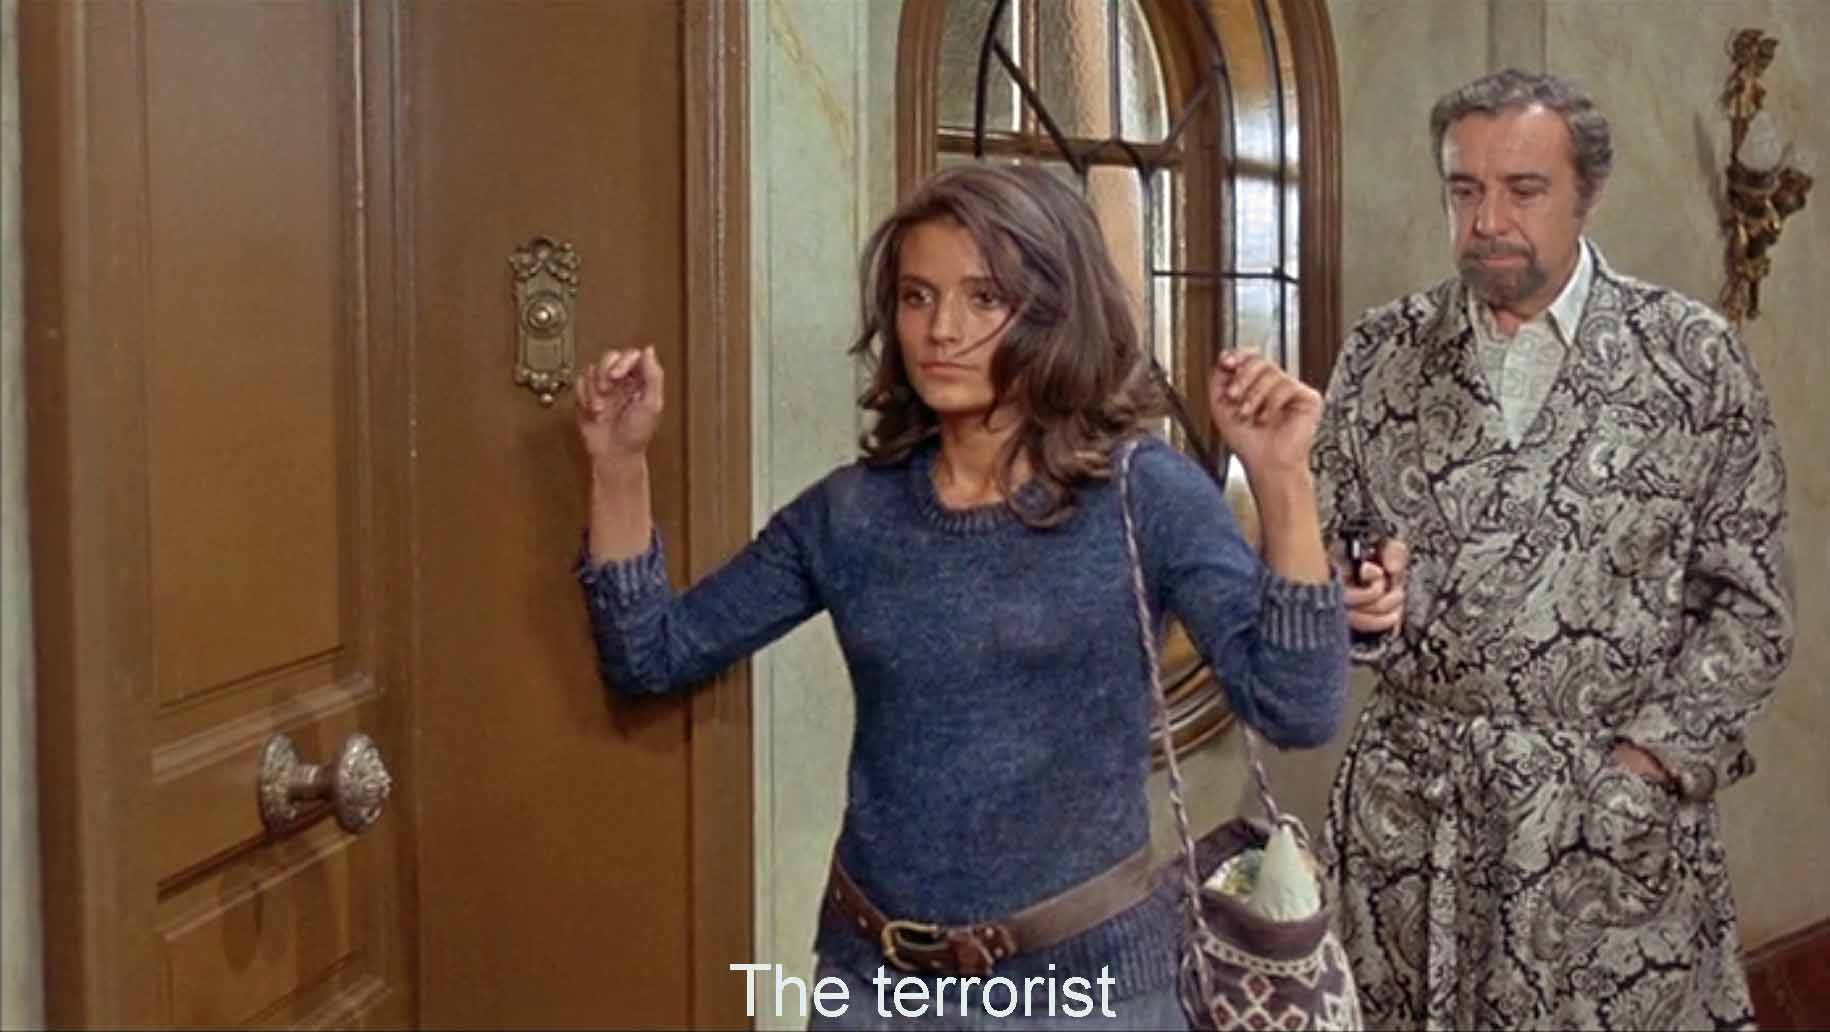 he terrorist